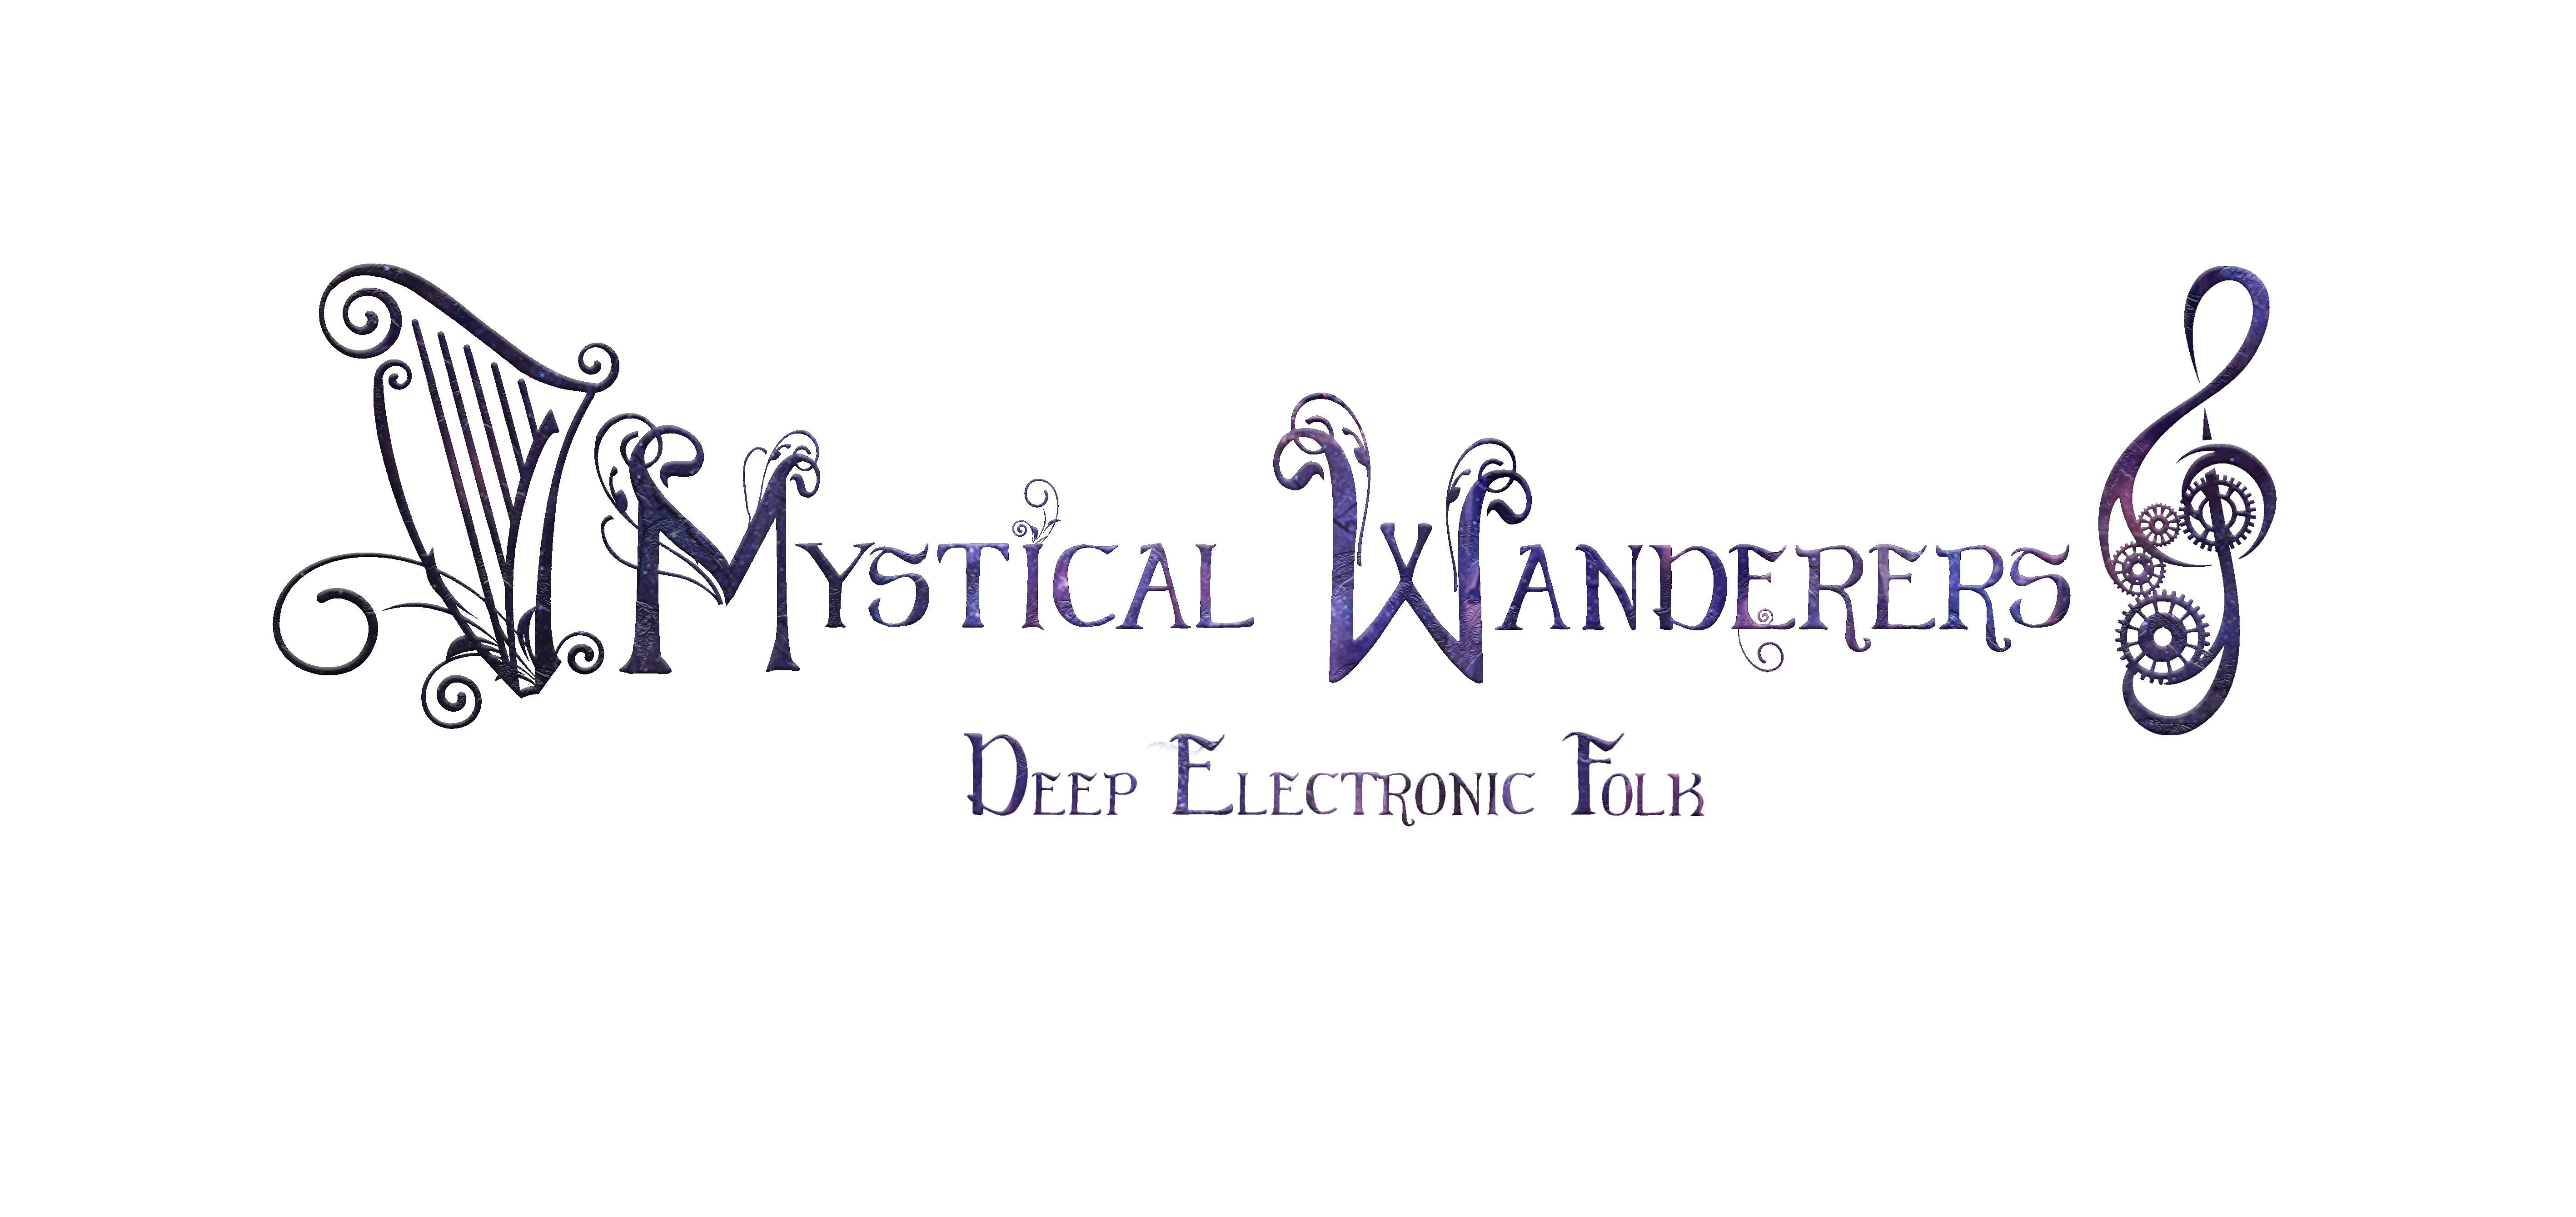 Mystical Wanderers Deep Electronic Folk Logo 